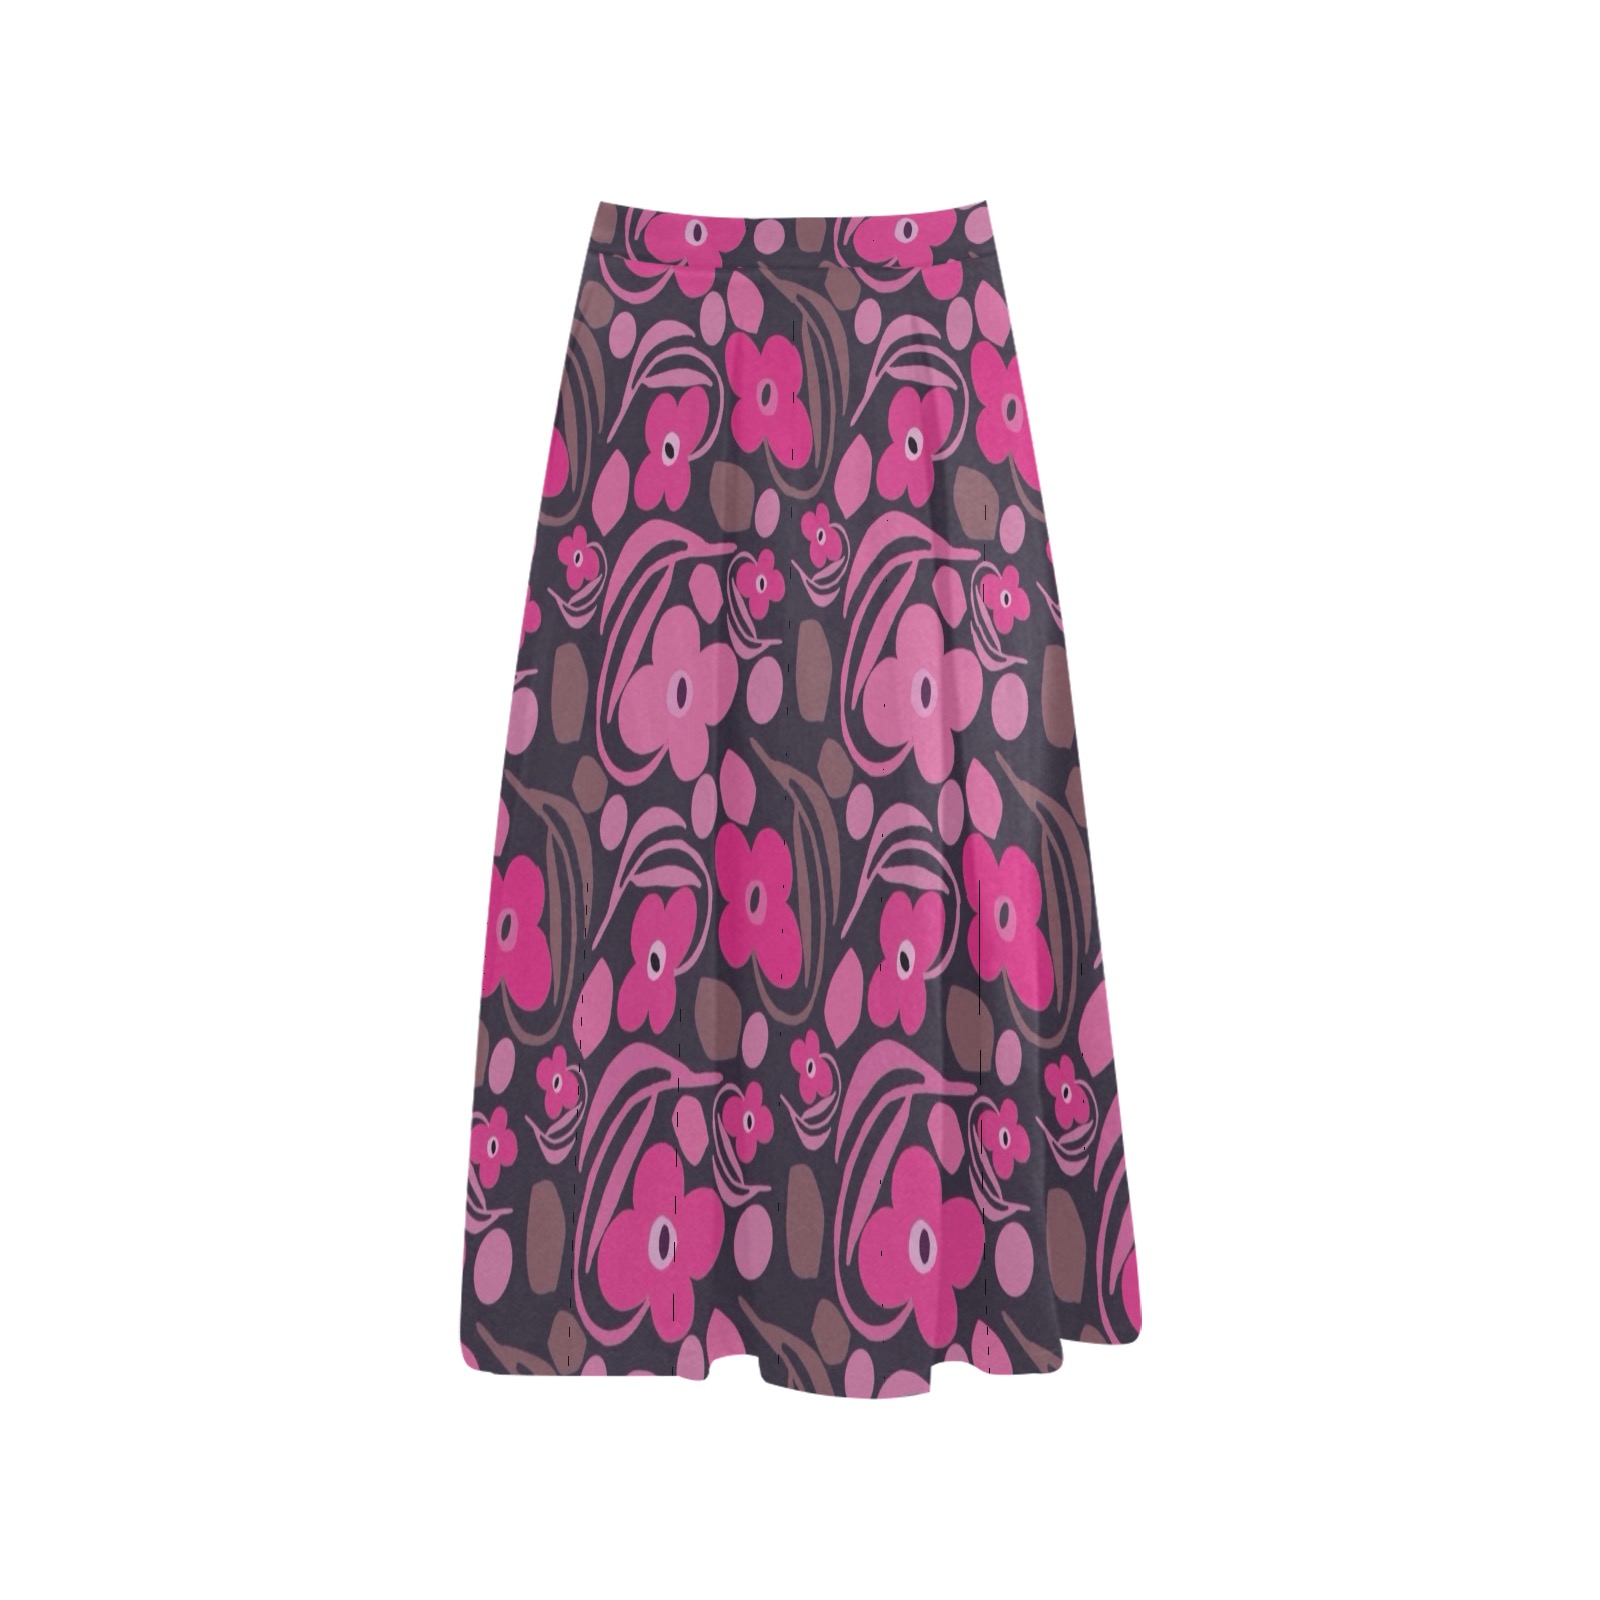 Retro pink floral Mnemosyne Women's Crepe Skirt (Model D16)